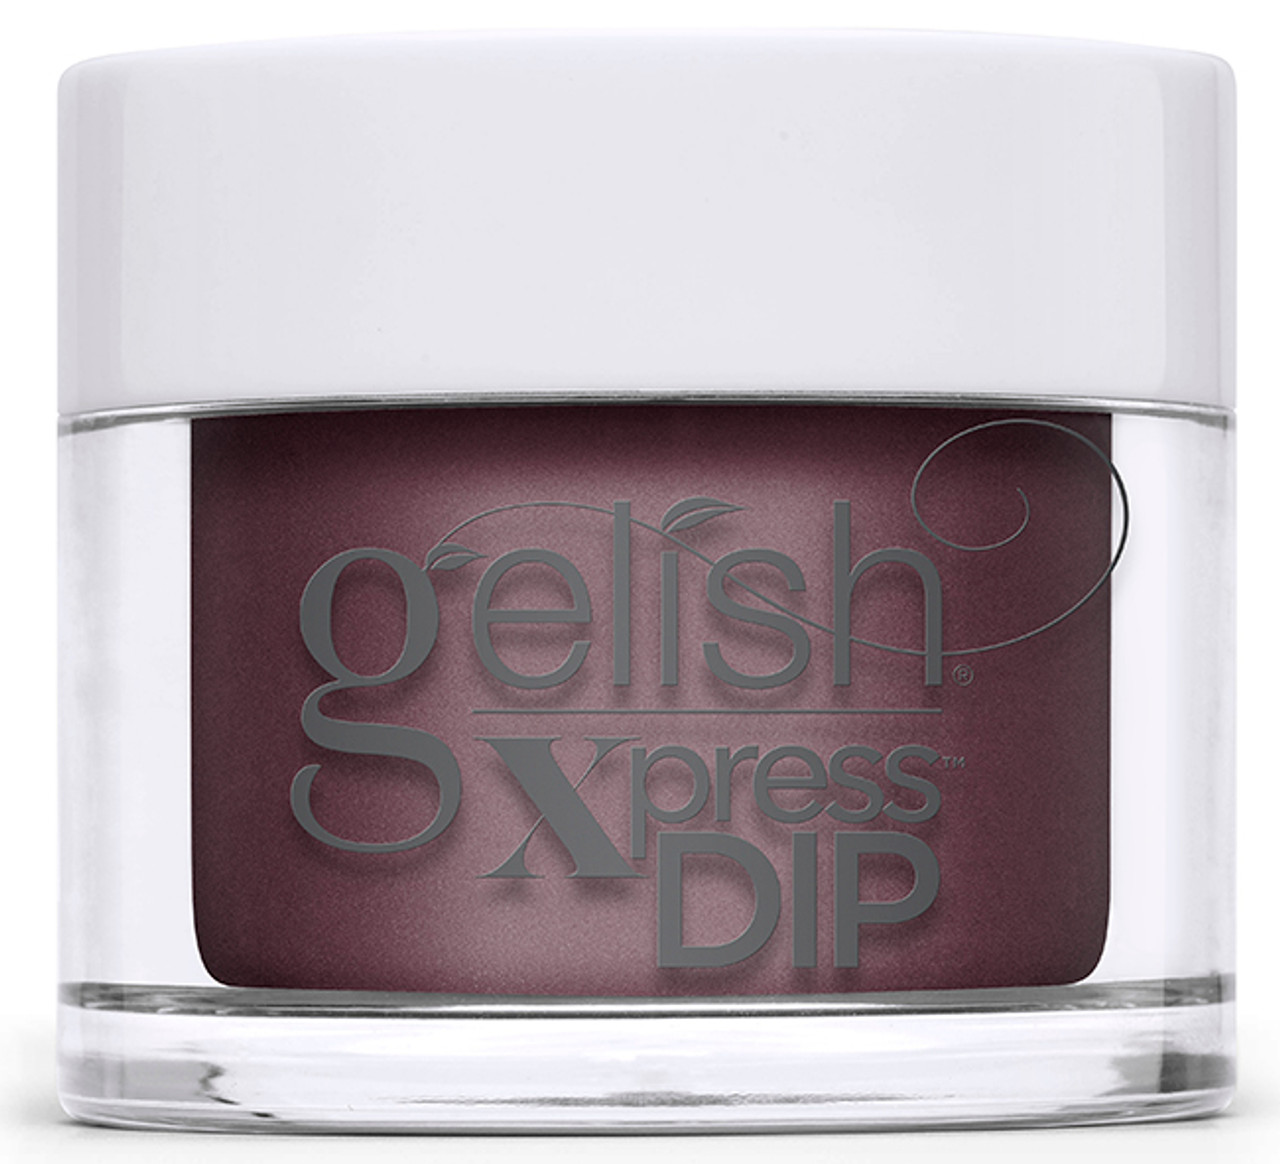 Gelish Xpress Dip A Little Naughty - 1.5 oz / 43 g